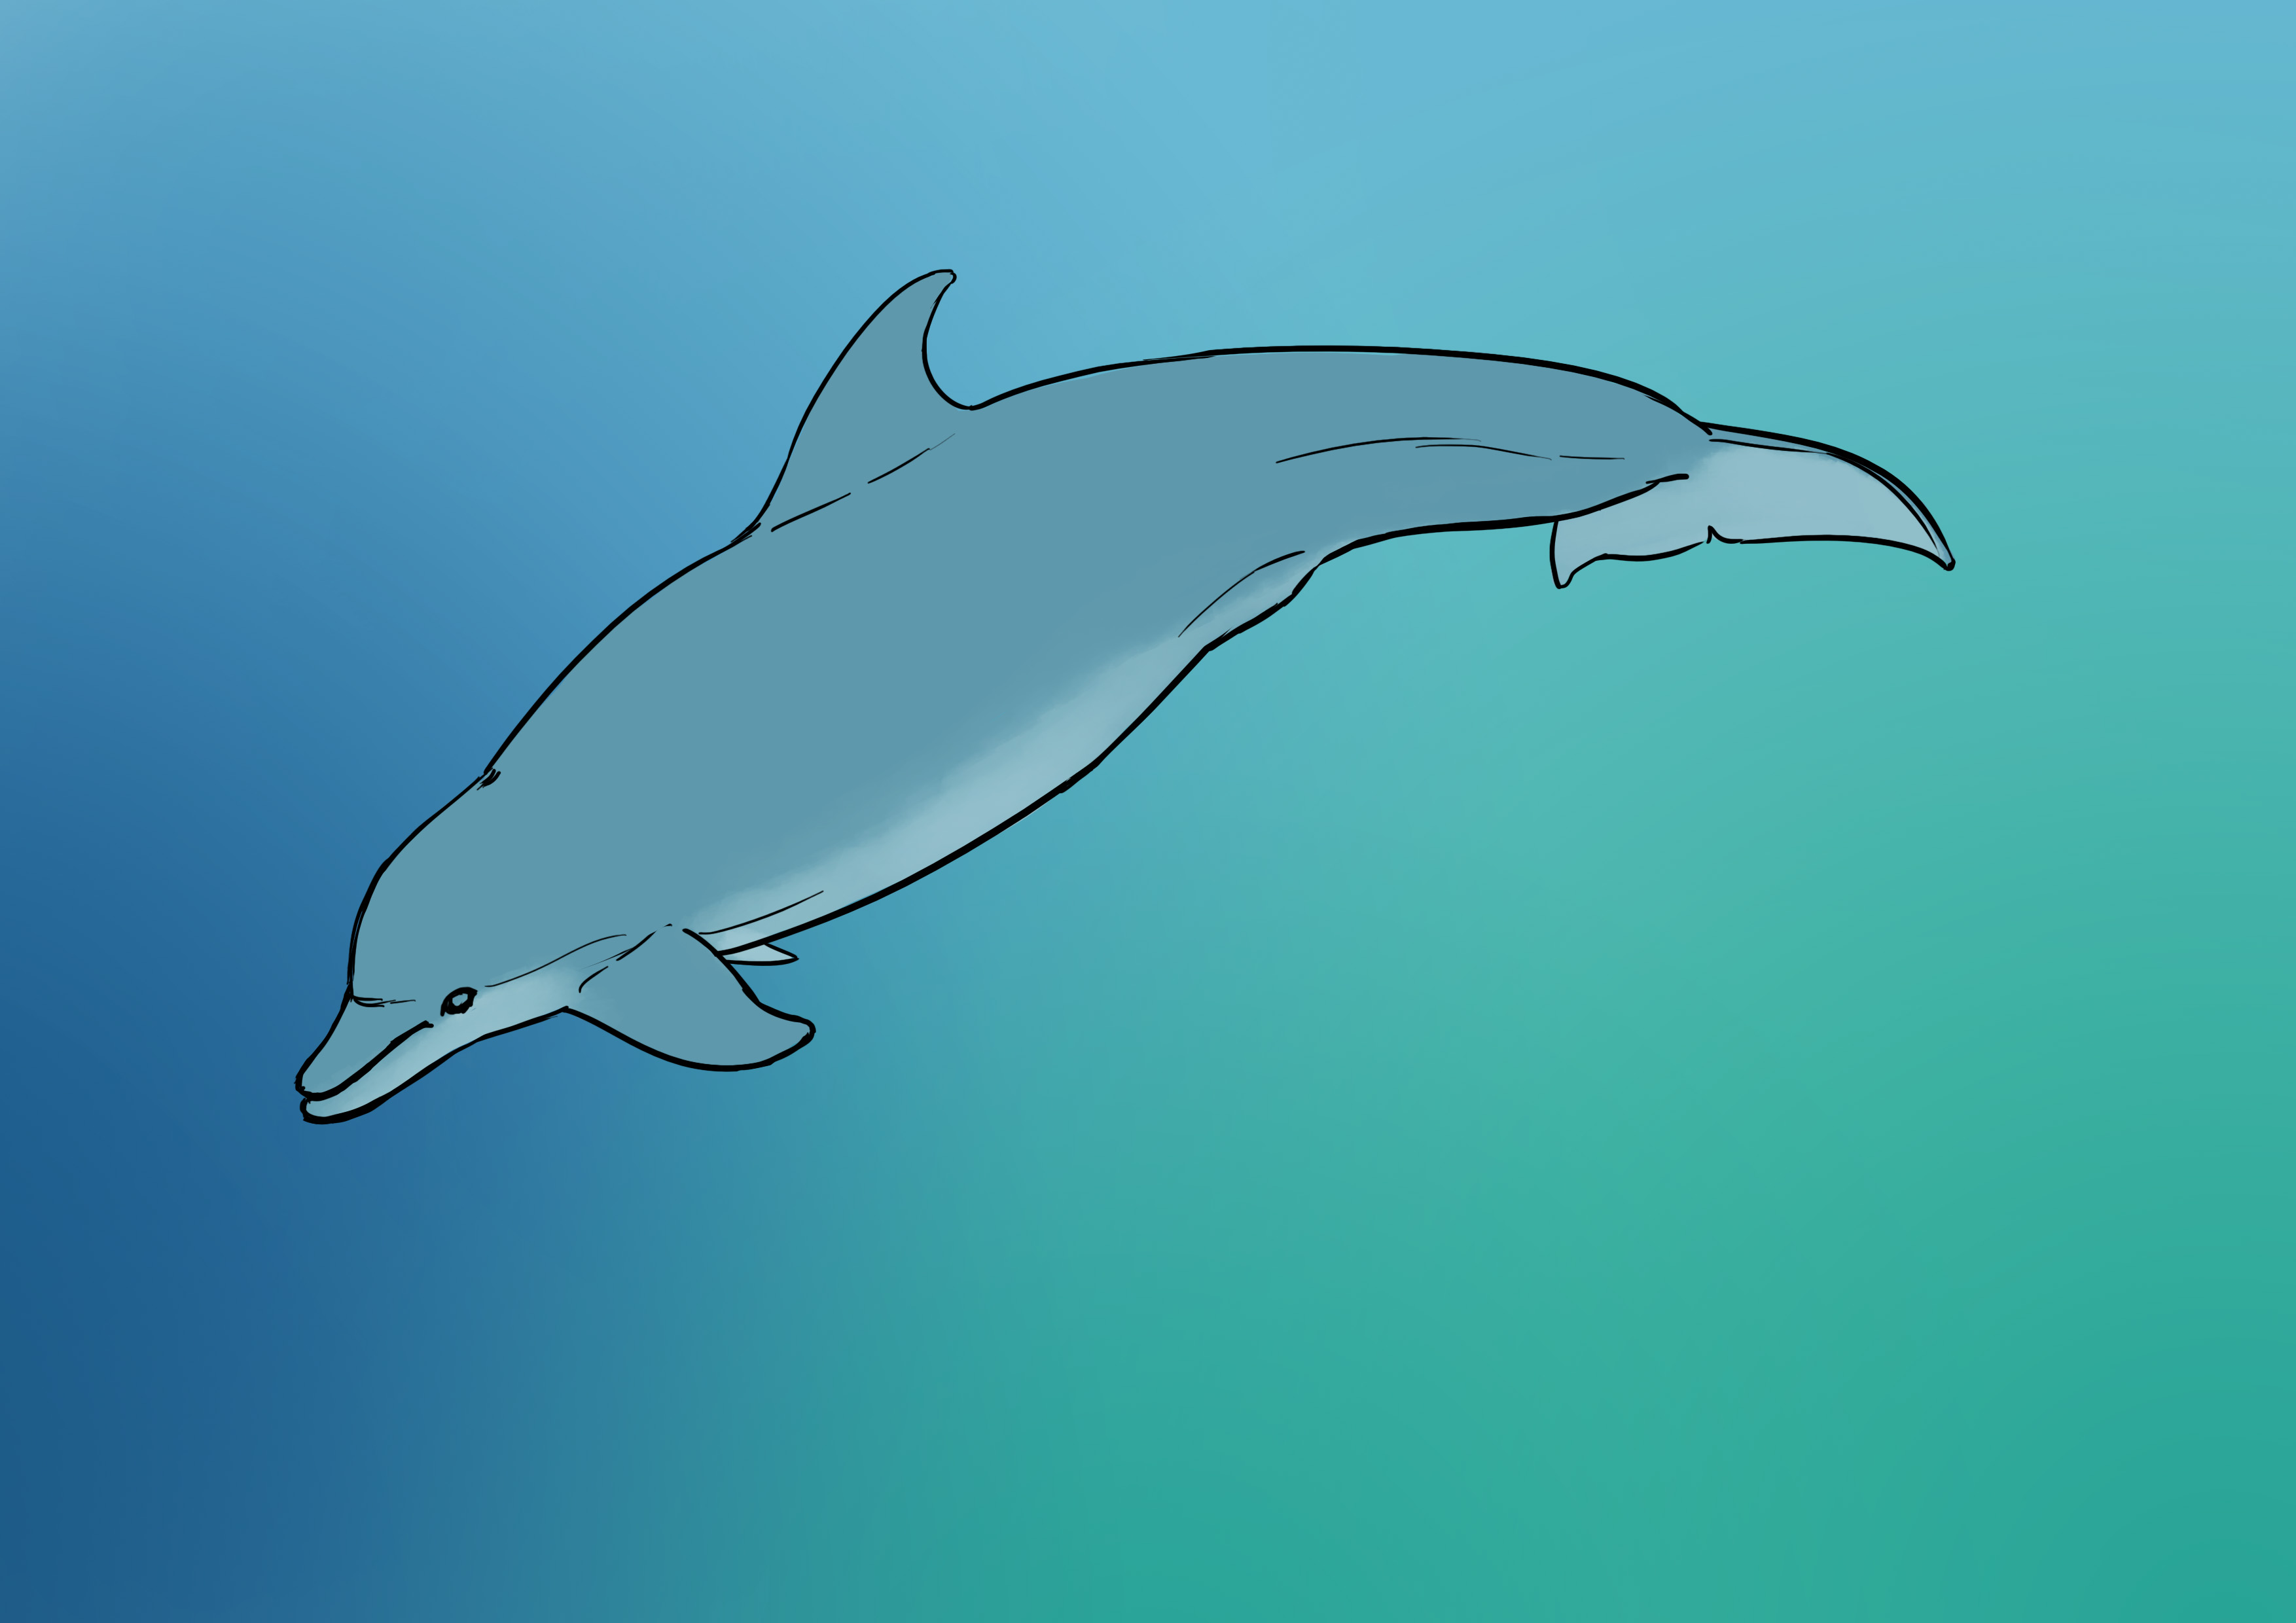 Calque du dessin de dauphin